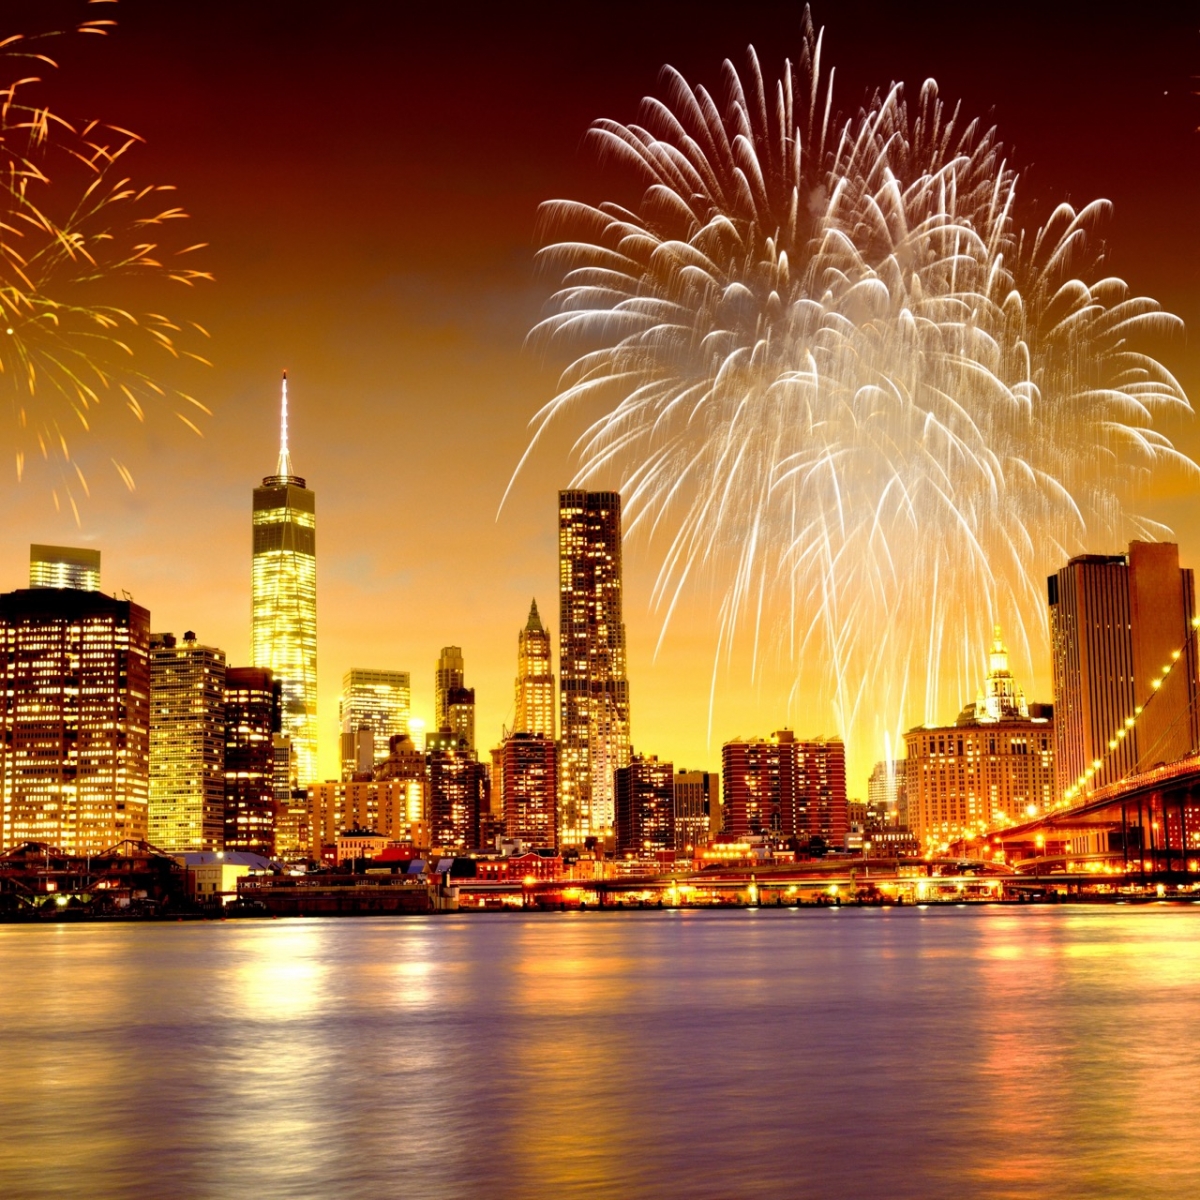 Feux d'artifice du Nouvel An sur Manhattan, New York